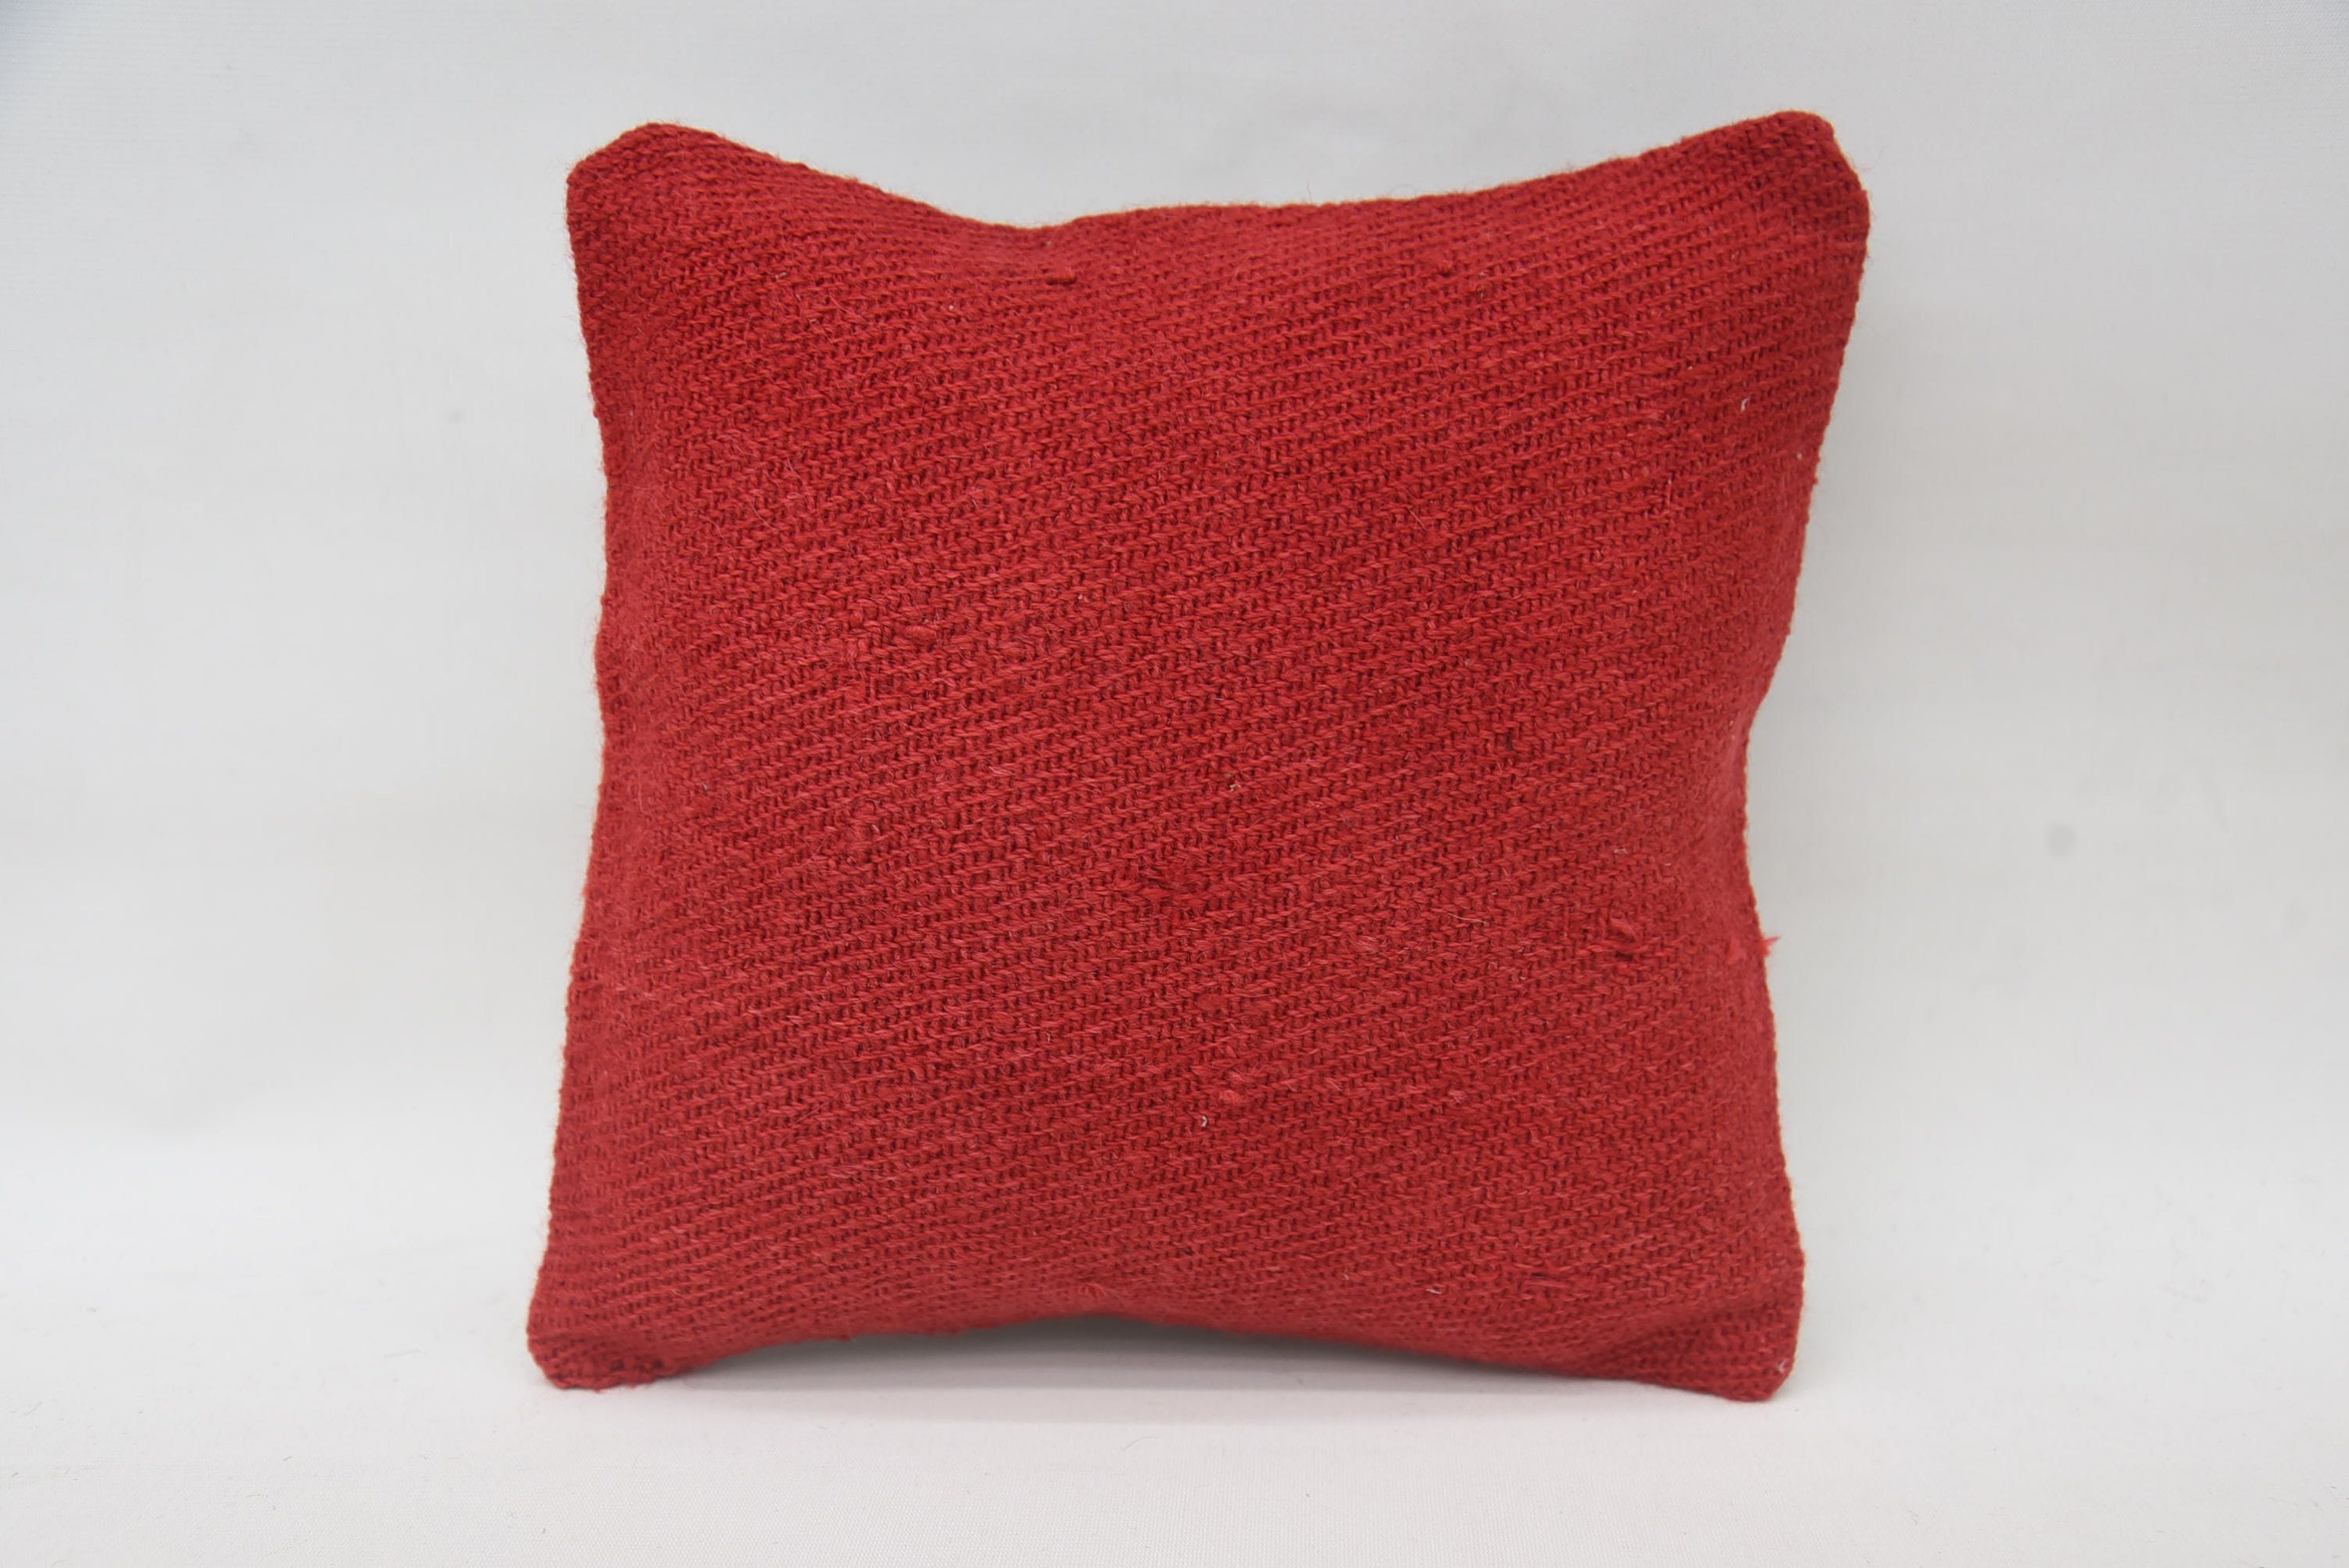 12"x12" Red Pillow, Vintage Pillow, Pet Cushion Case, Living Room Throw Pillow, Kilim Pillow Cover, Neutral Pillow Case, Pillow for Sofa